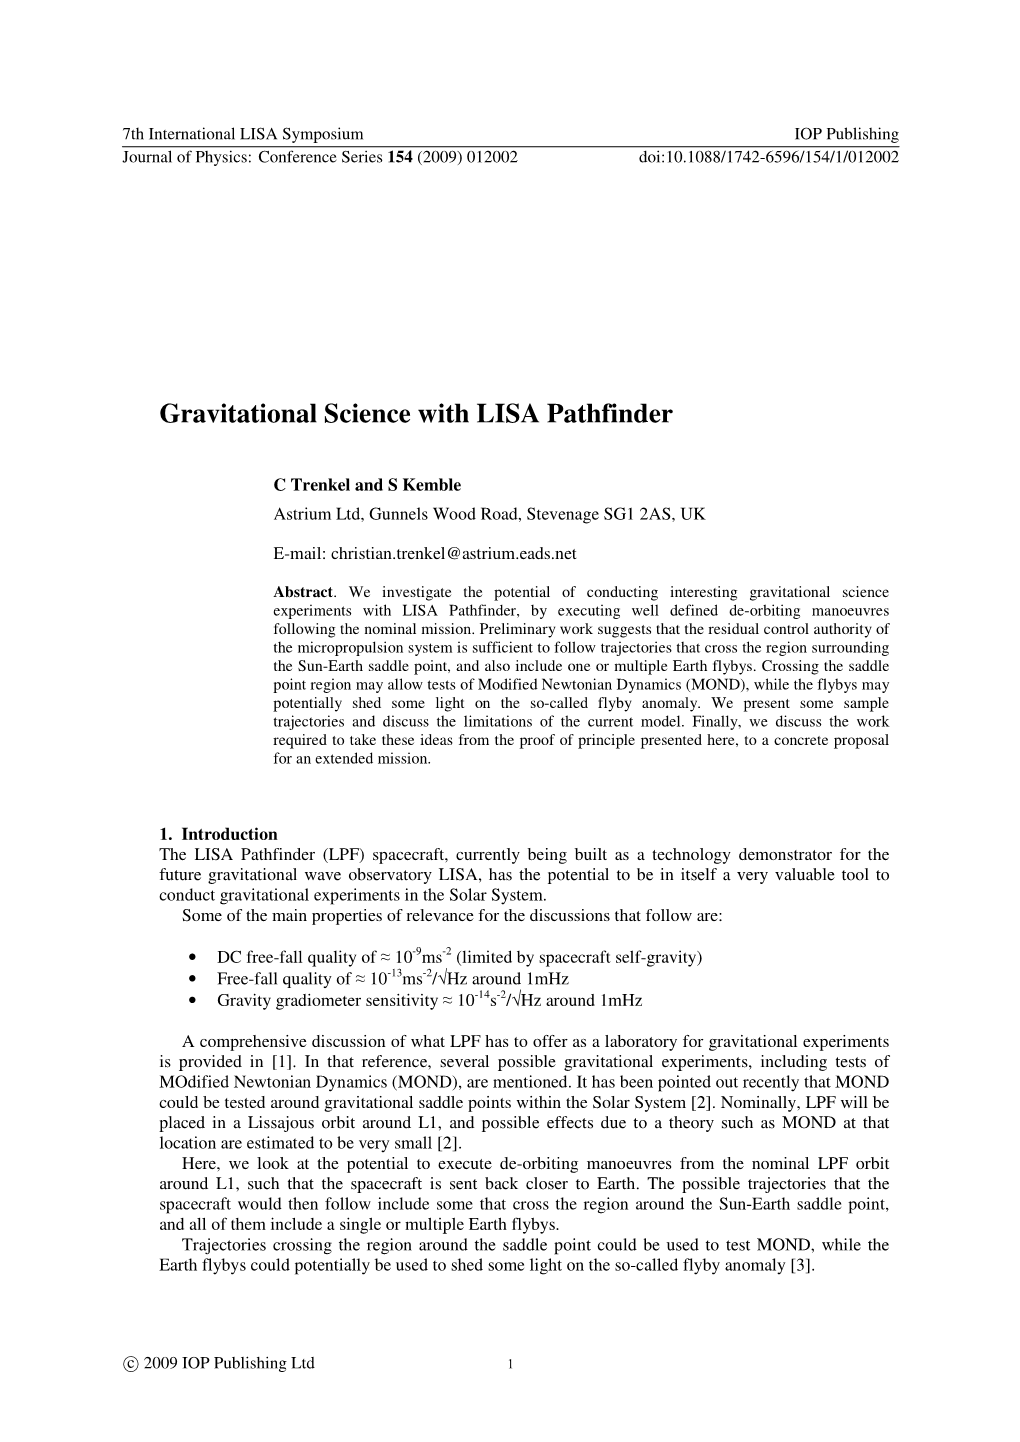 Gravitational Science with LISA Pathfinder